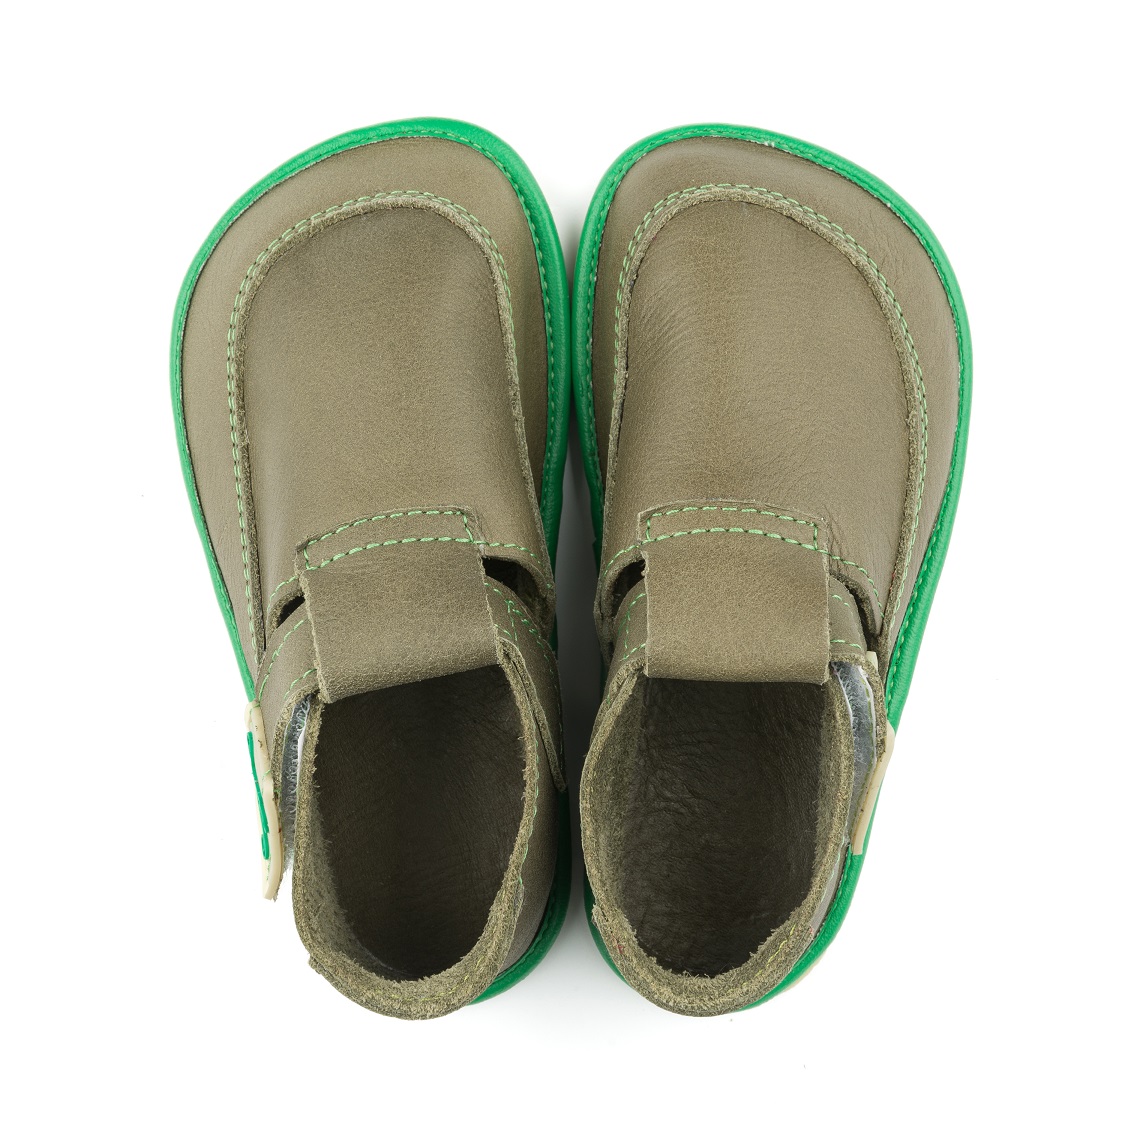 Barefoot shoes for kids LULU KHAKI - Magical Shoes